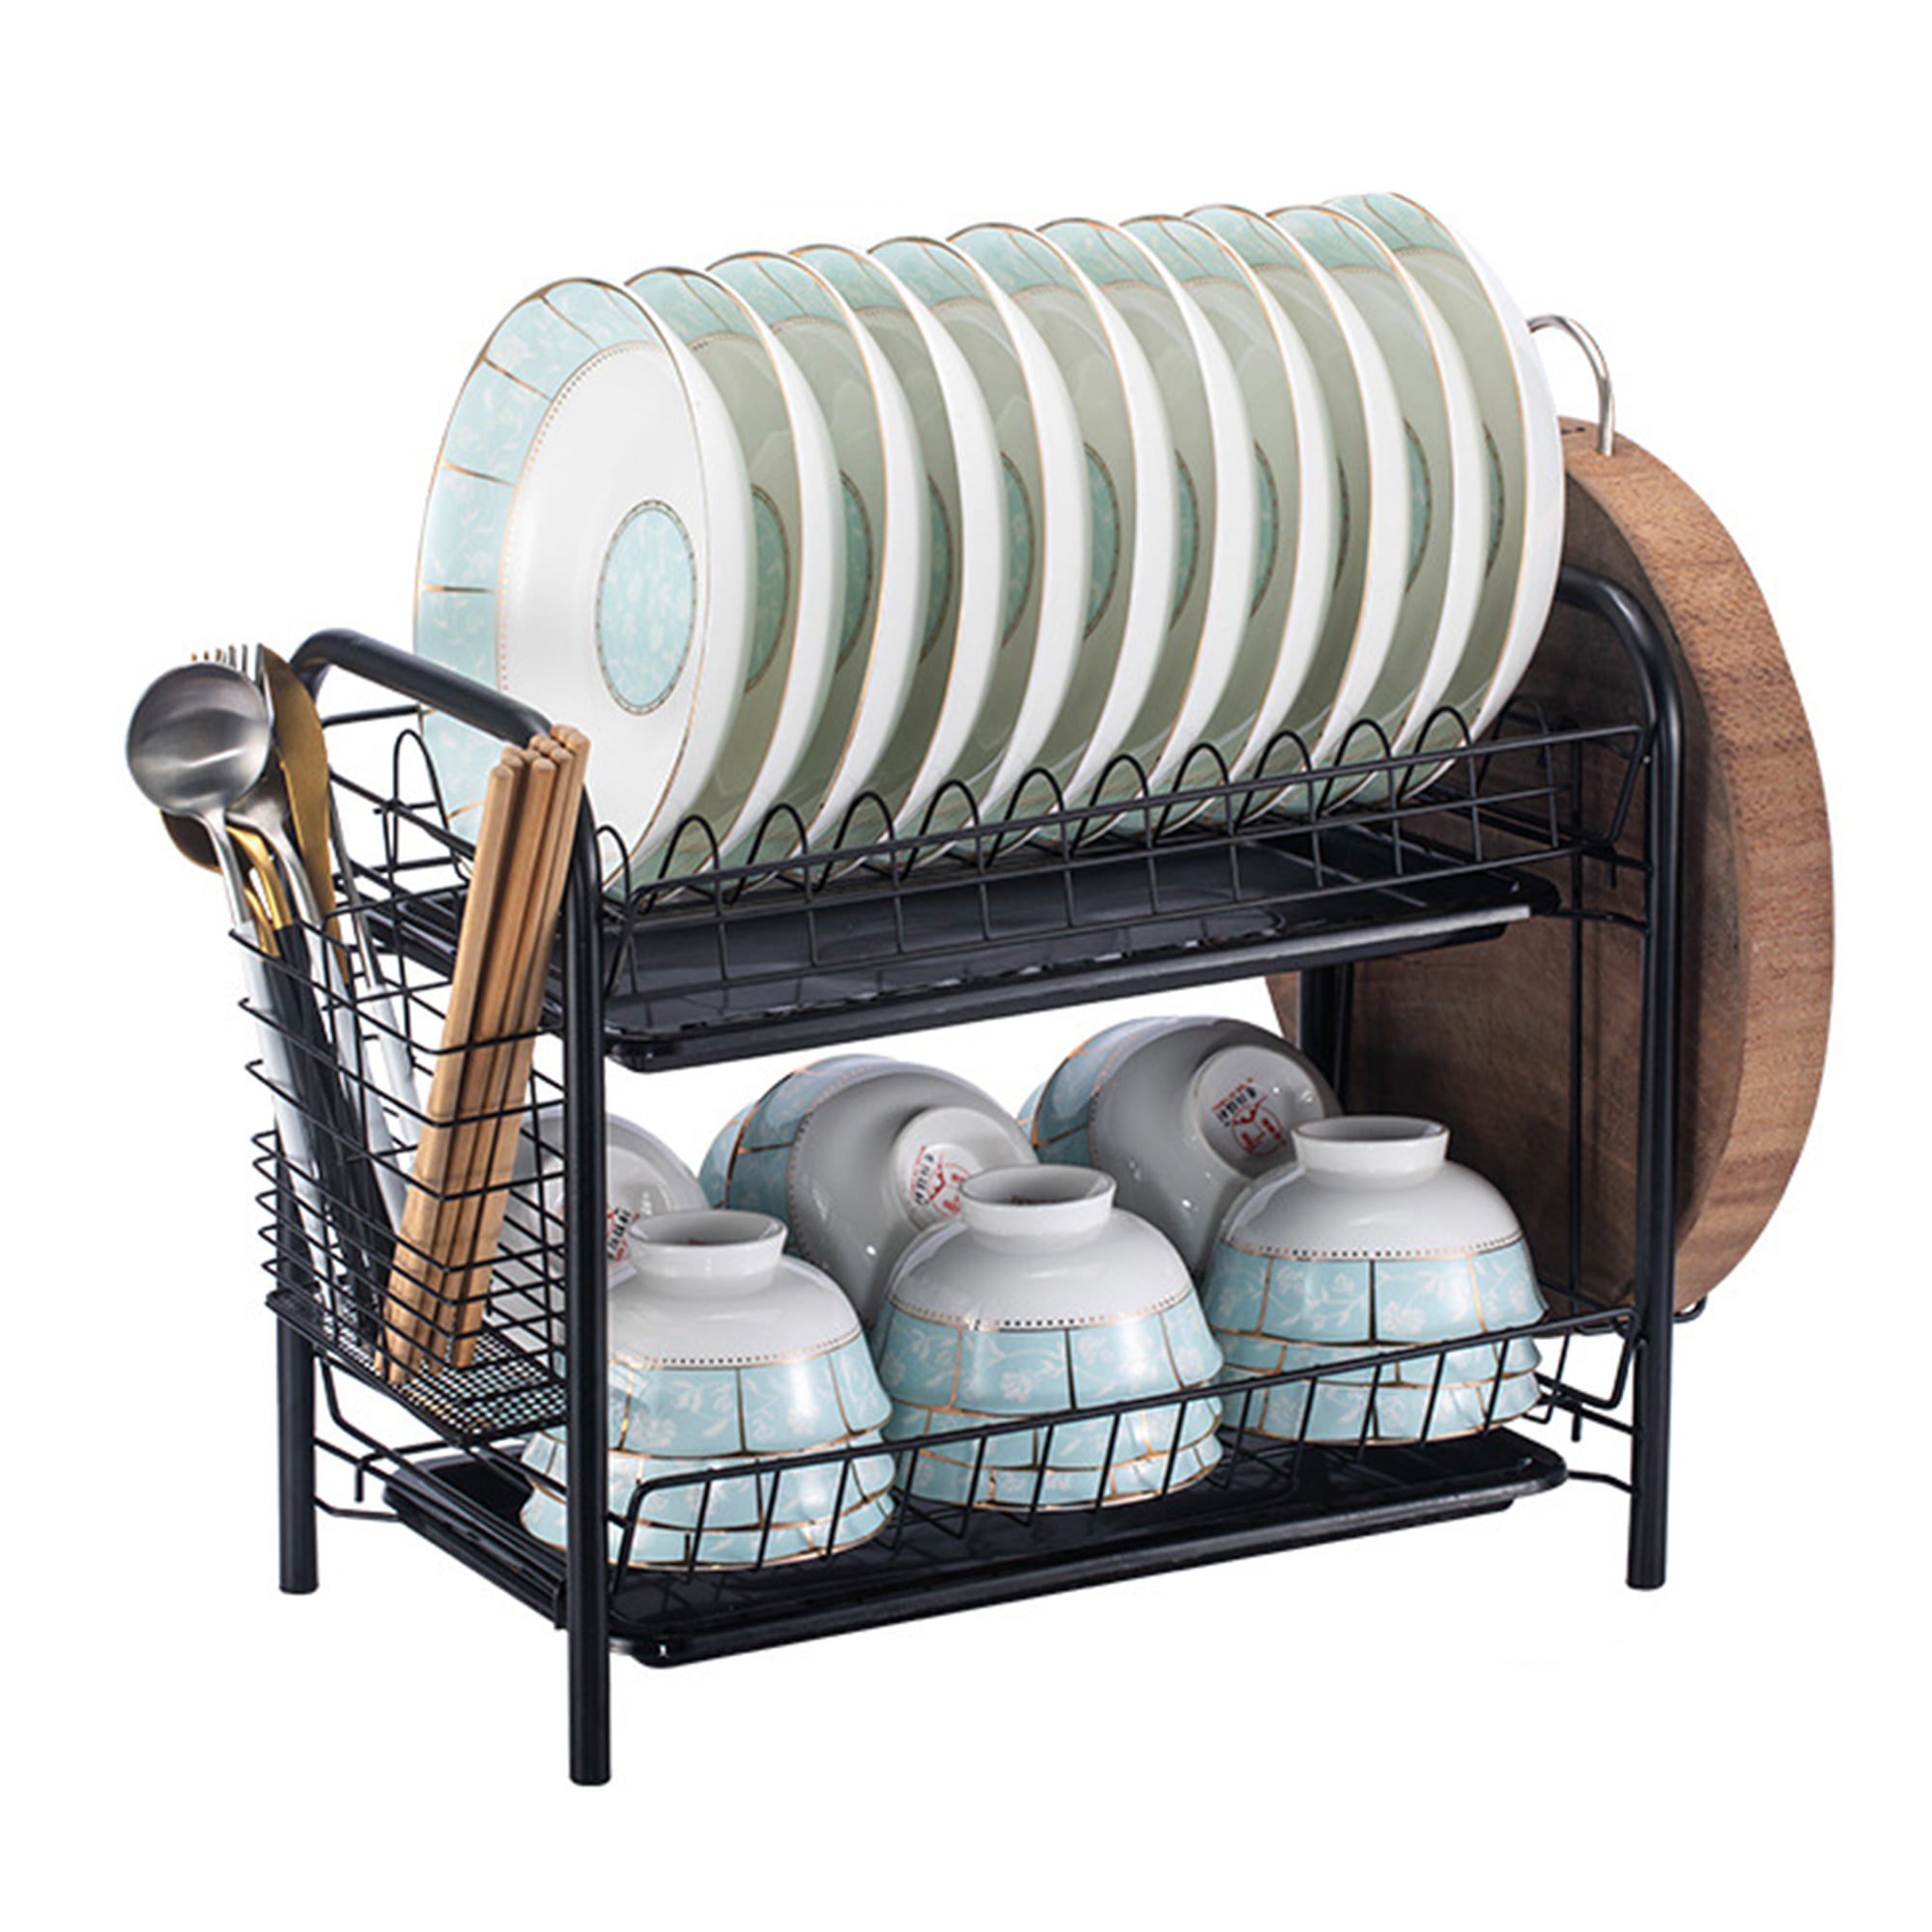 Details about   Large Capacity Dish Drying Rack Drainer Shelf Kitchen Storage Organizer 